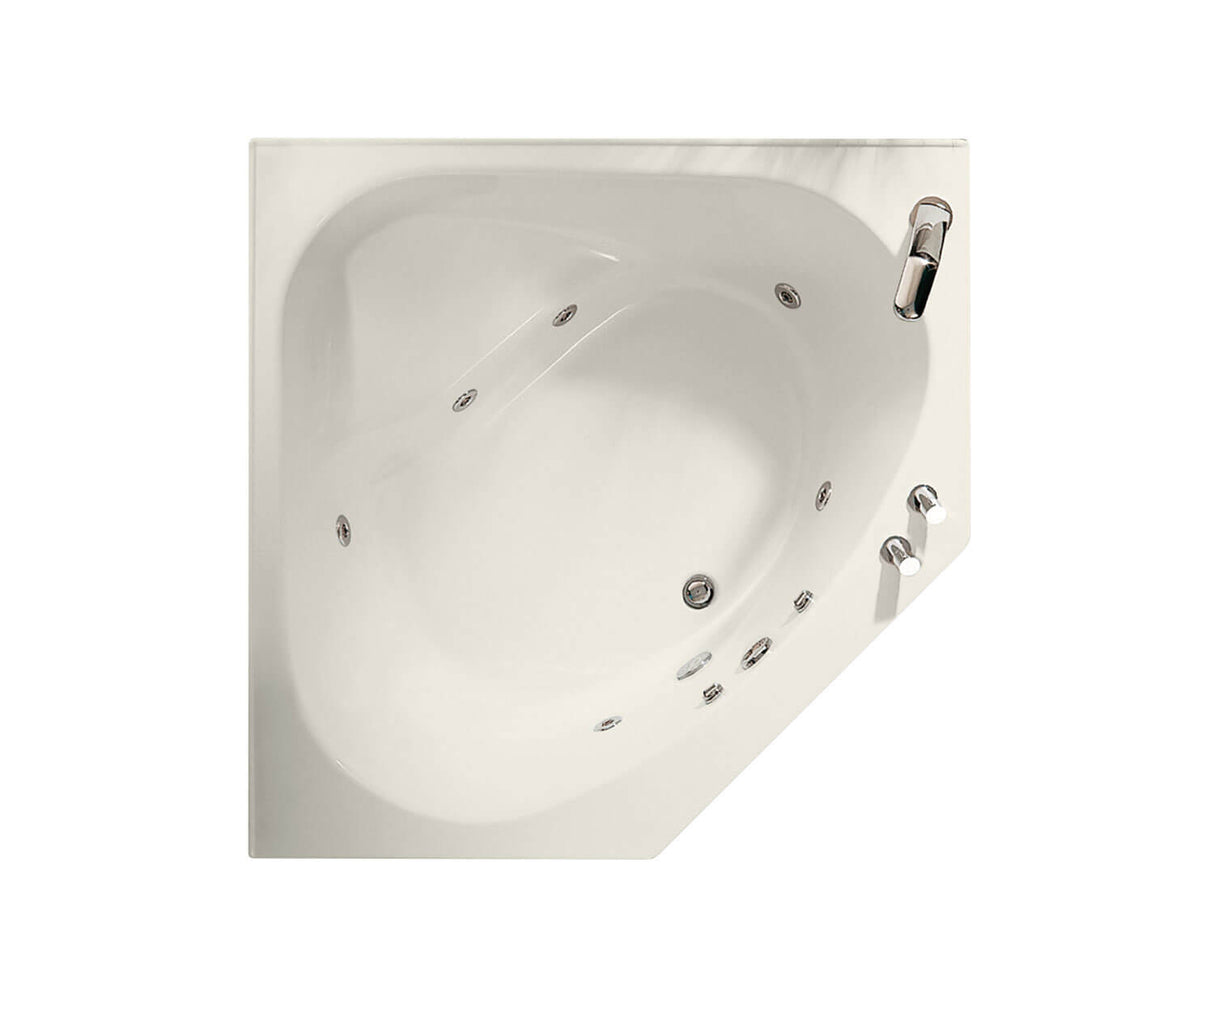 MAAX 100875-RL-097-007 Tandem 5454 Acrylic Corner Center Drain Combined Whirlpool & Aeroeffect Bathtub in Biscuit